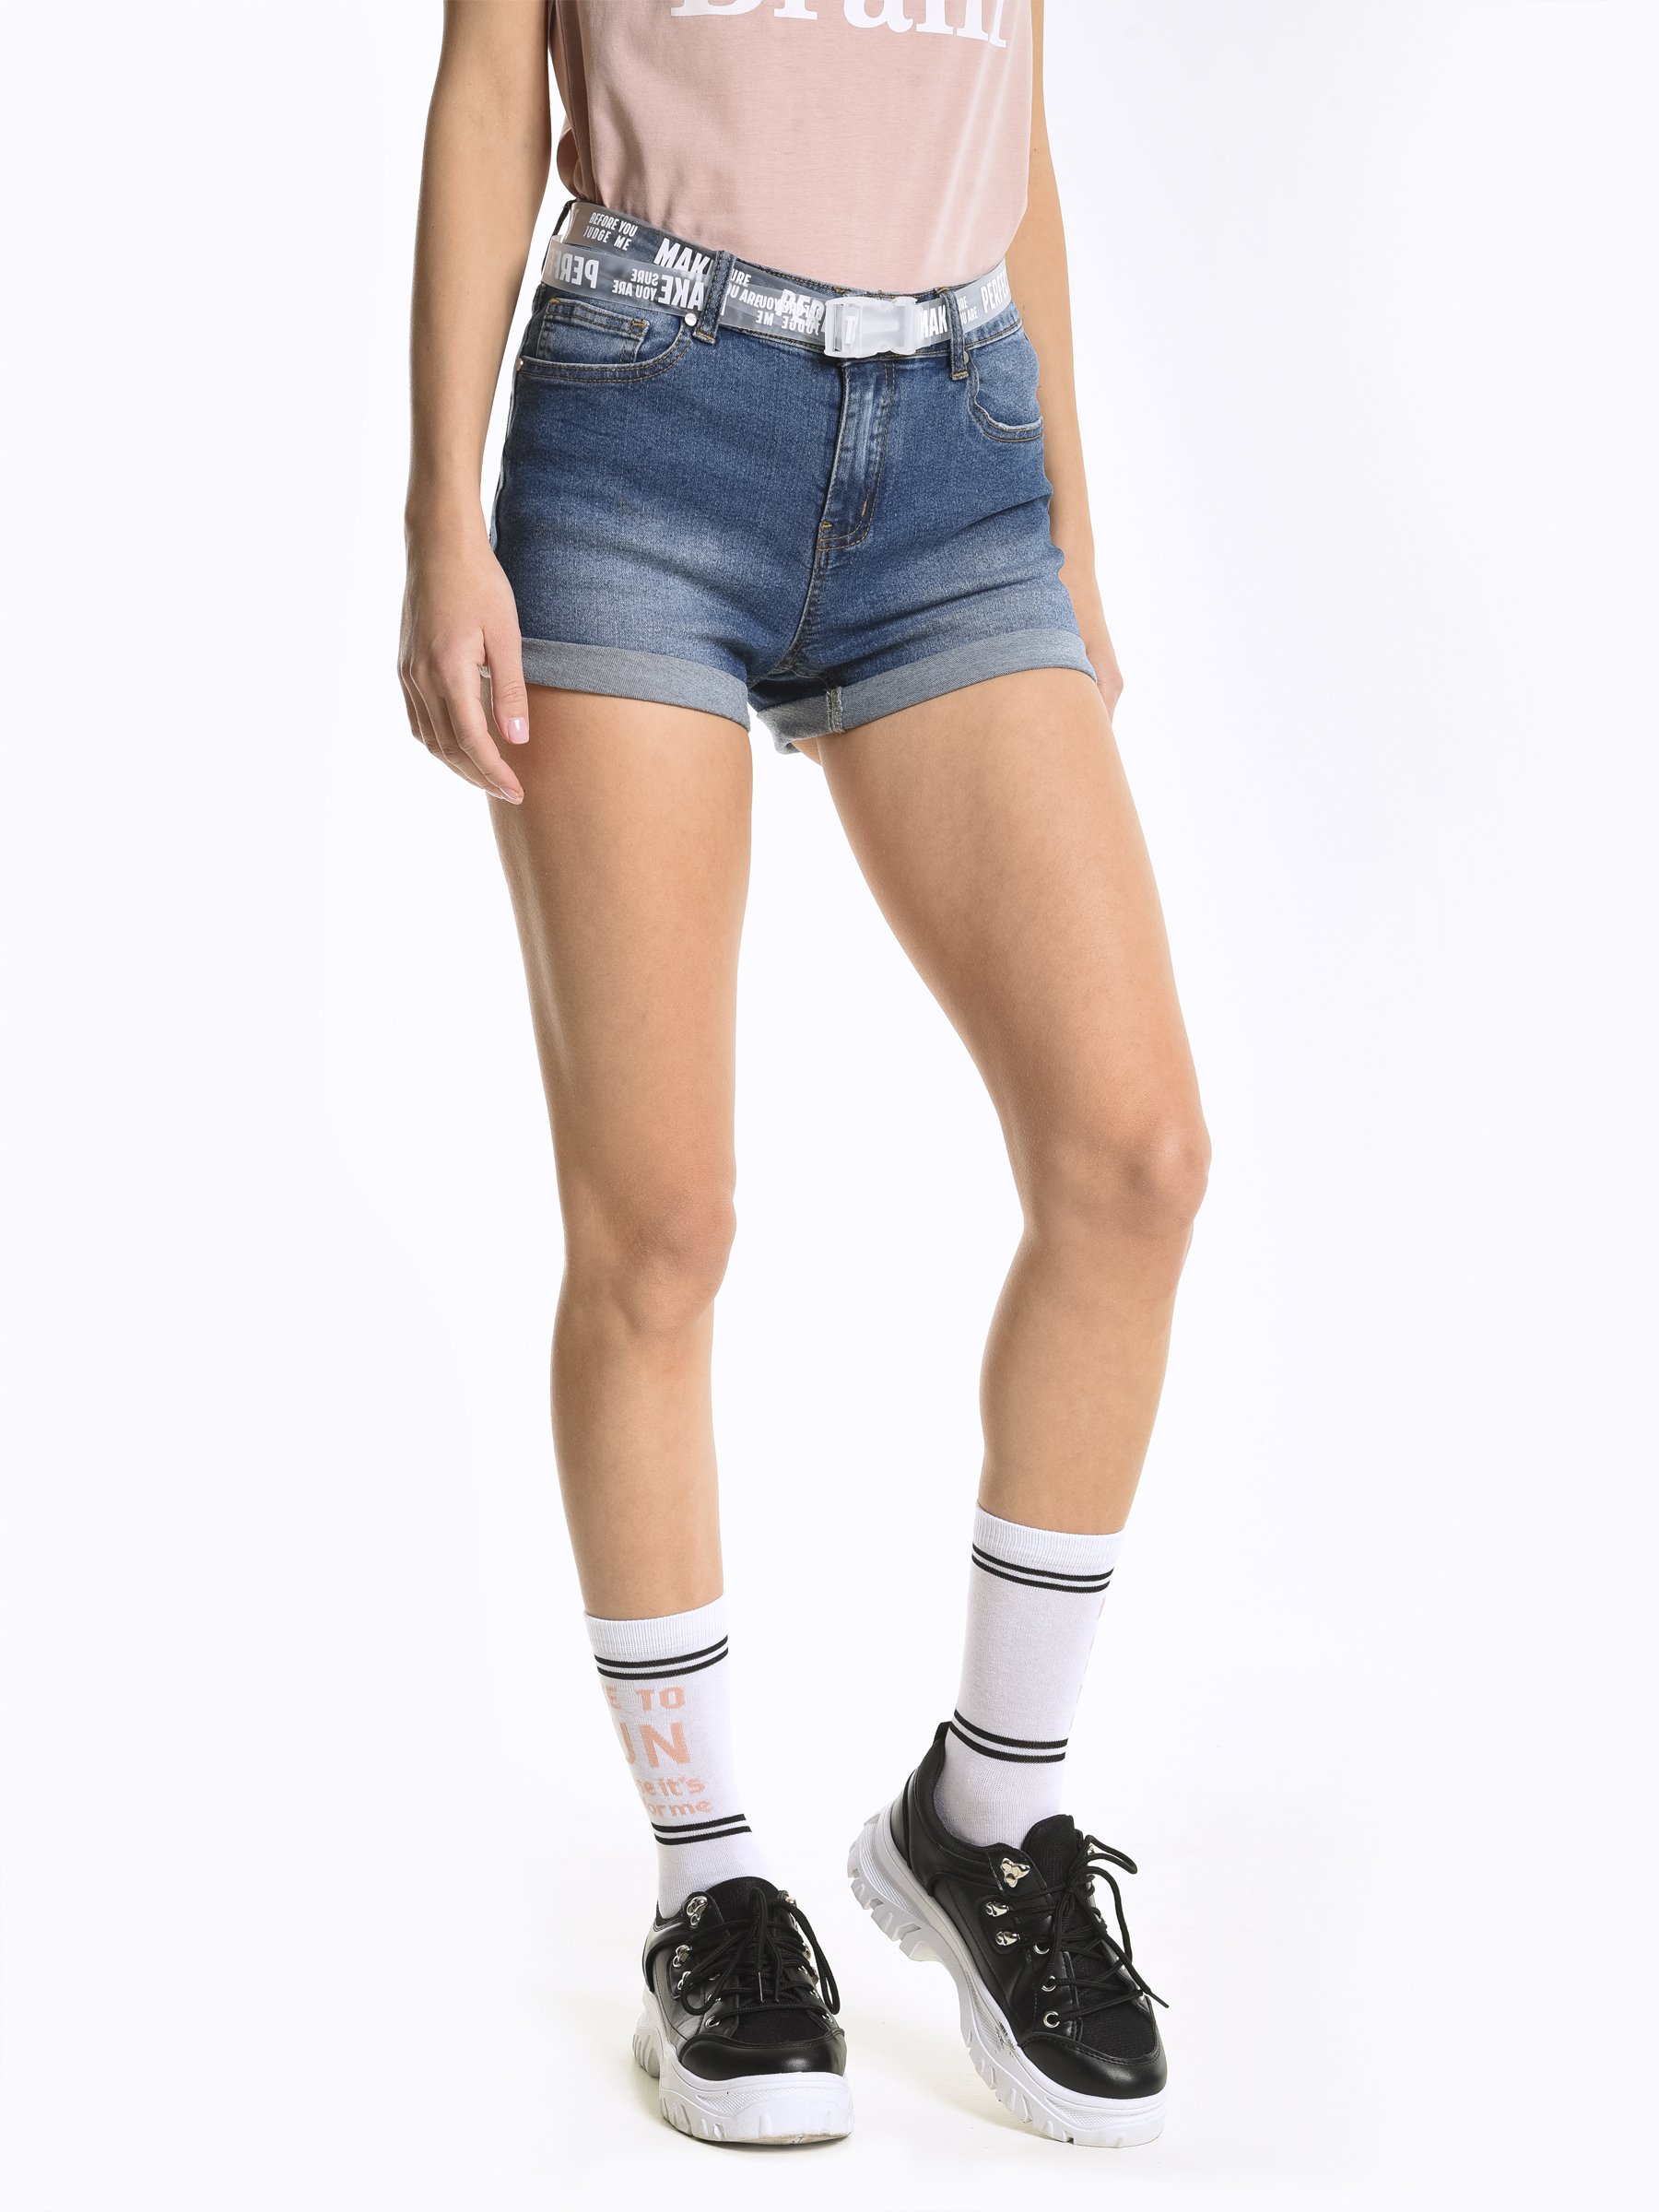 Denim Jr Small 3 / 4 Low Rise Distressed Cut Off Blue Jean Daisy Duke Shorts  on eBid United States | 215805042